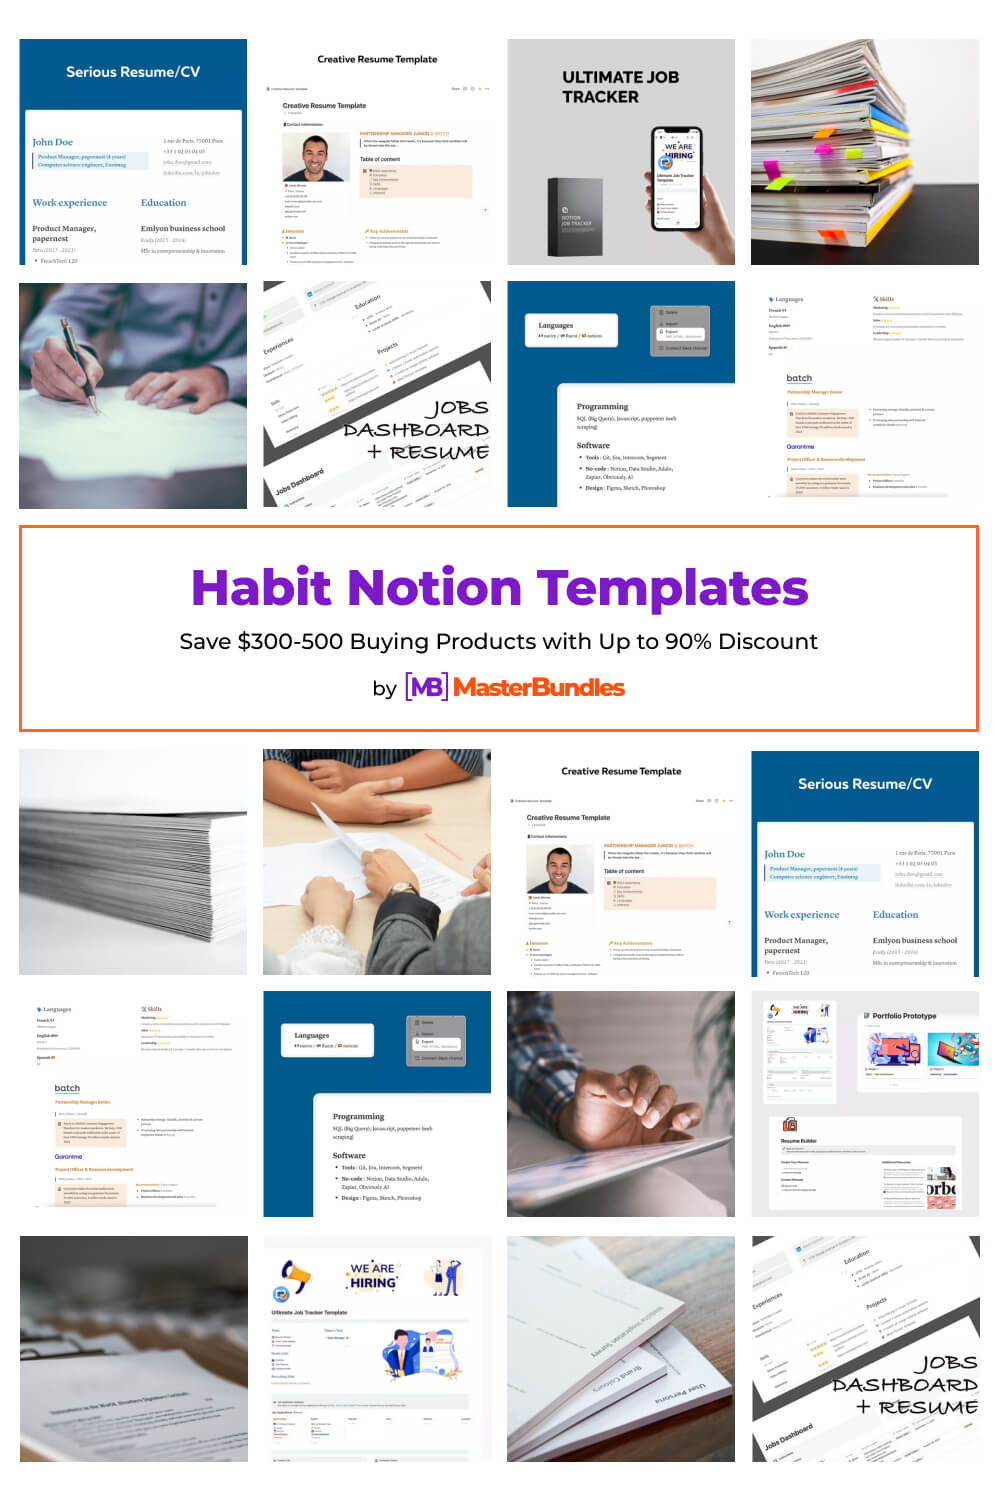 habit notion templates pinterest image.